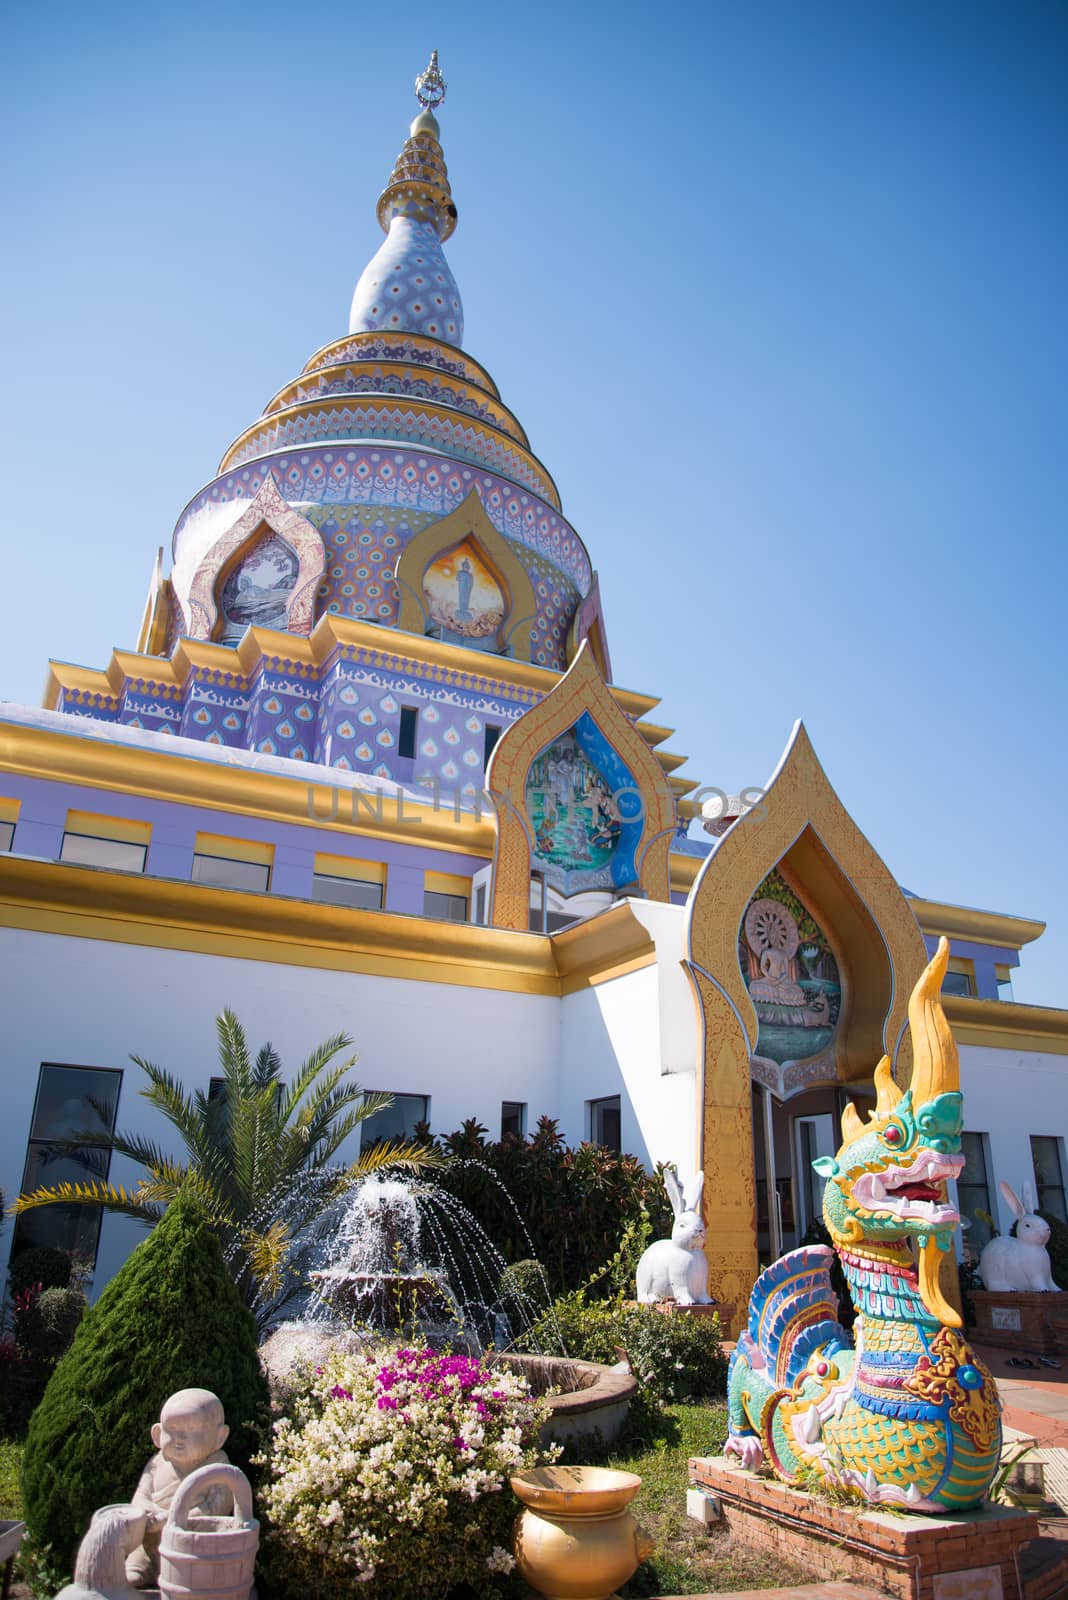 Thaton temple in mae ai Chiangmai the north of Thailand